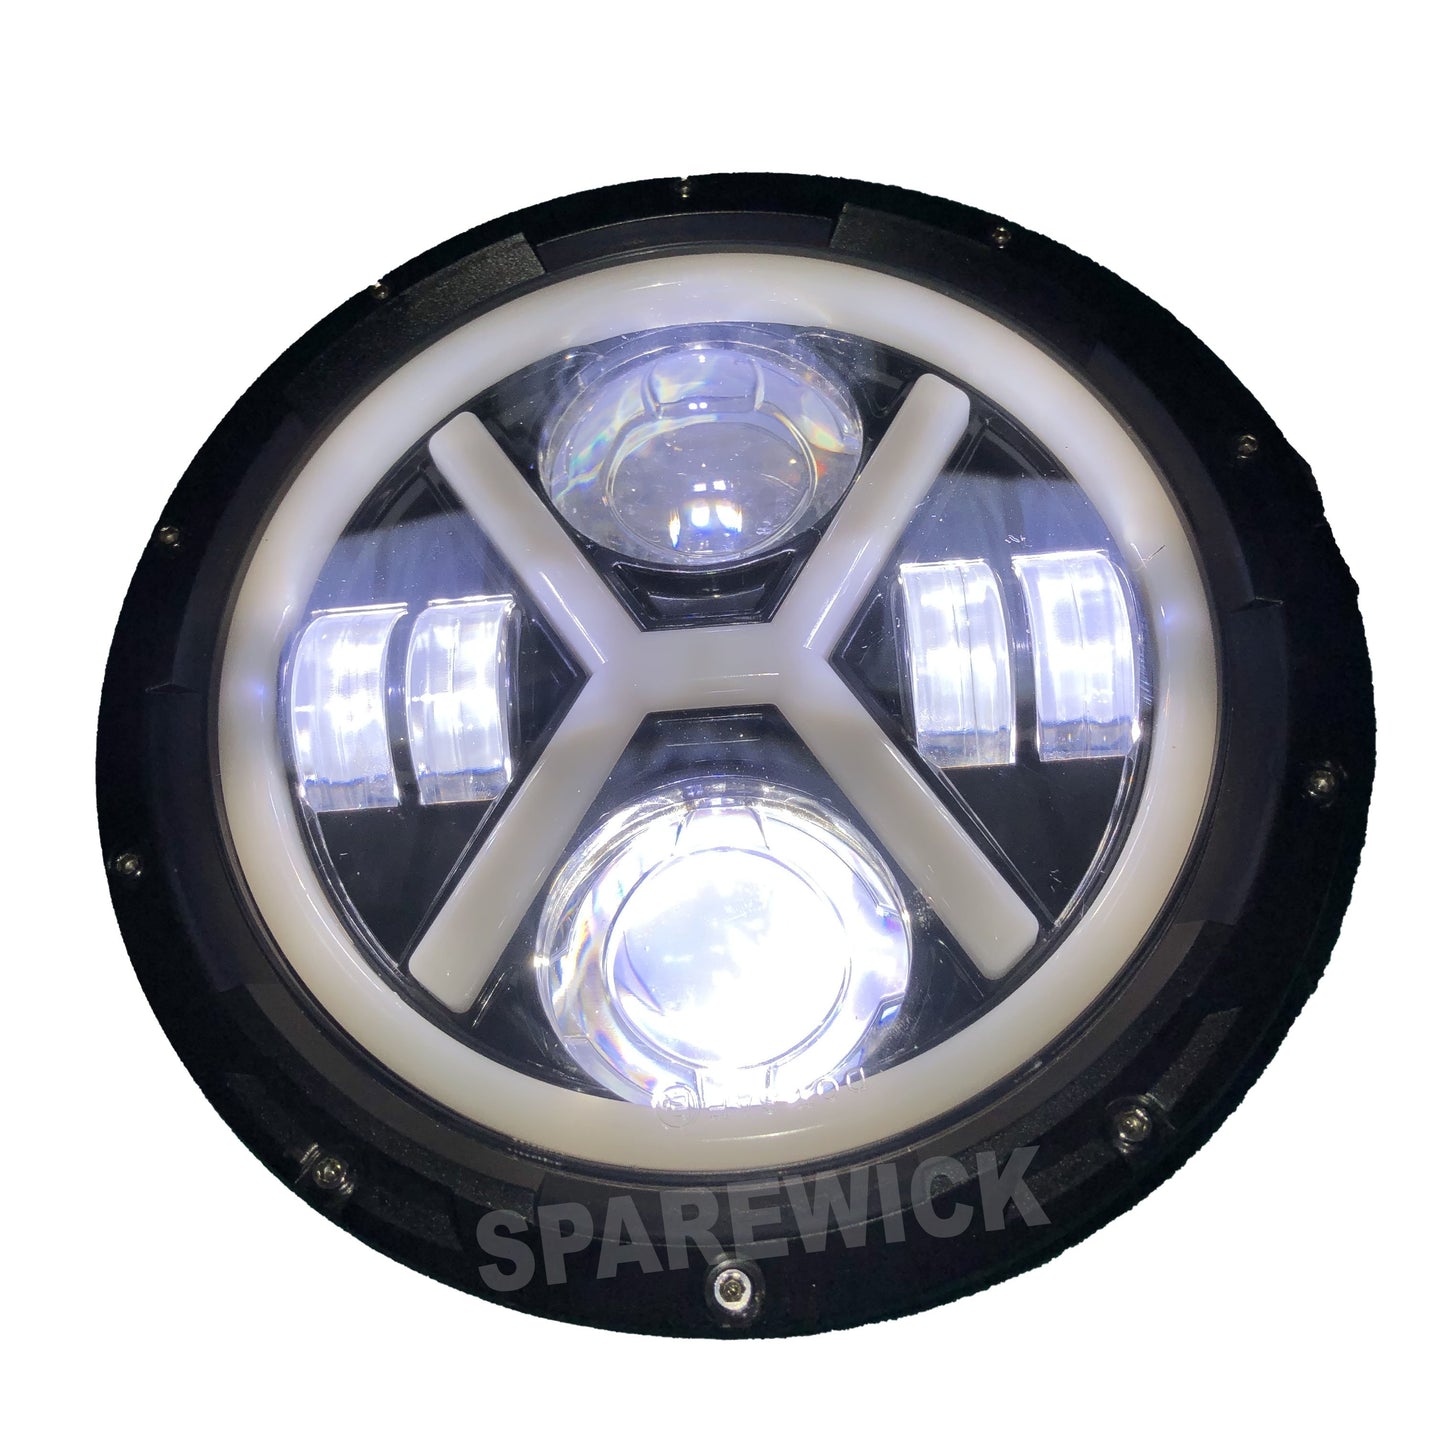 X Logo Headlight- 7 Inch (6 Months Warranty) - Premium Headlights from Sparewick - Just Rs. 2900! Shop now at Sparewick